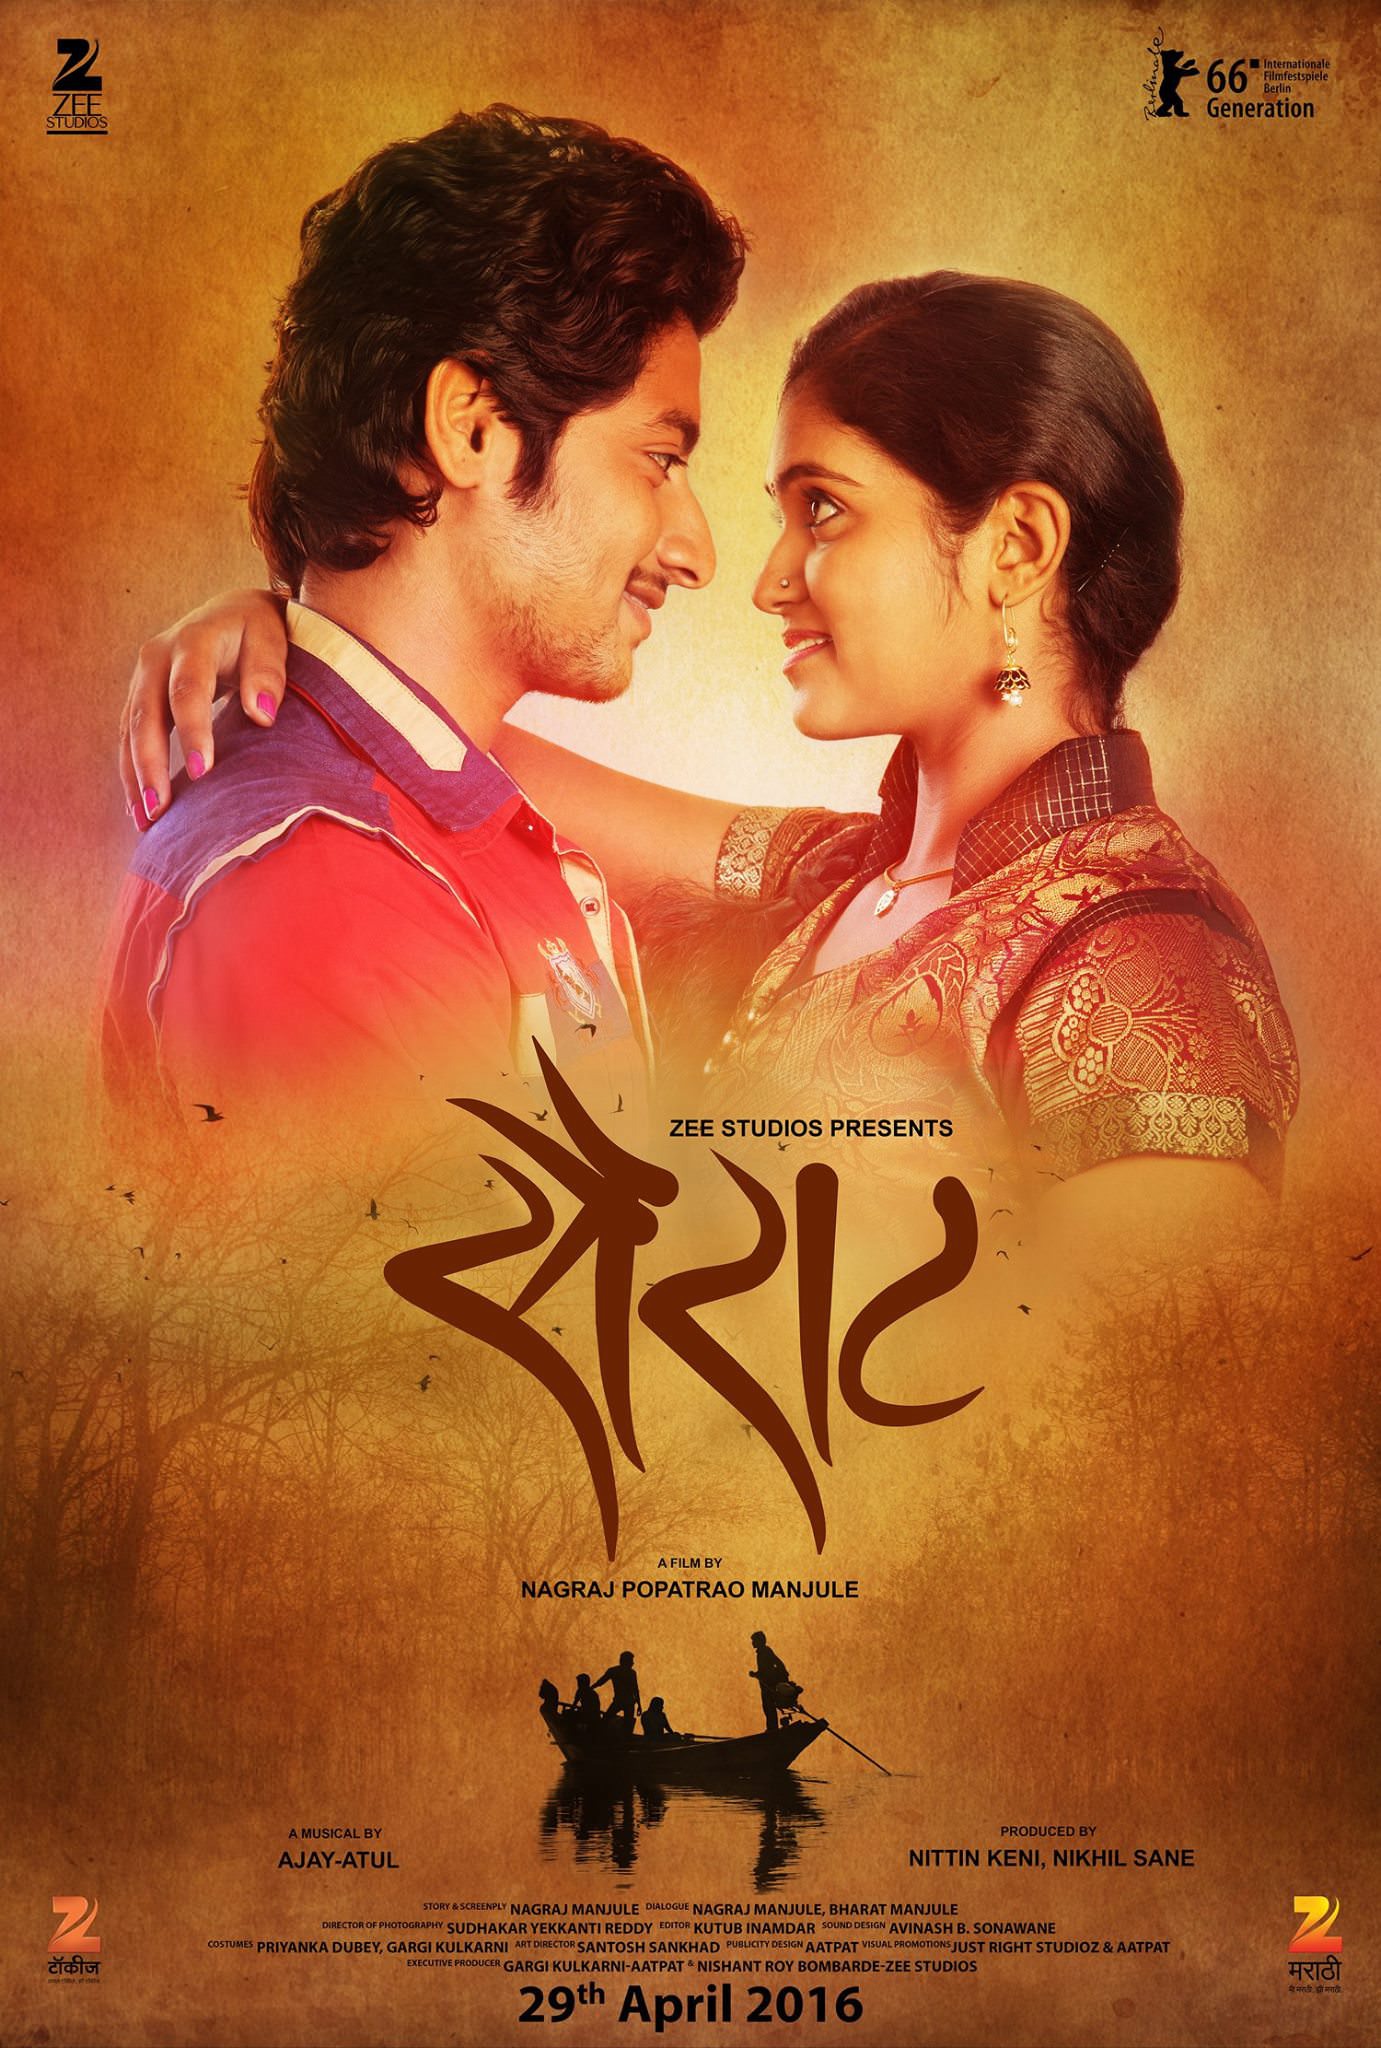 Mega Sized Movie Poster Image for Sairat 